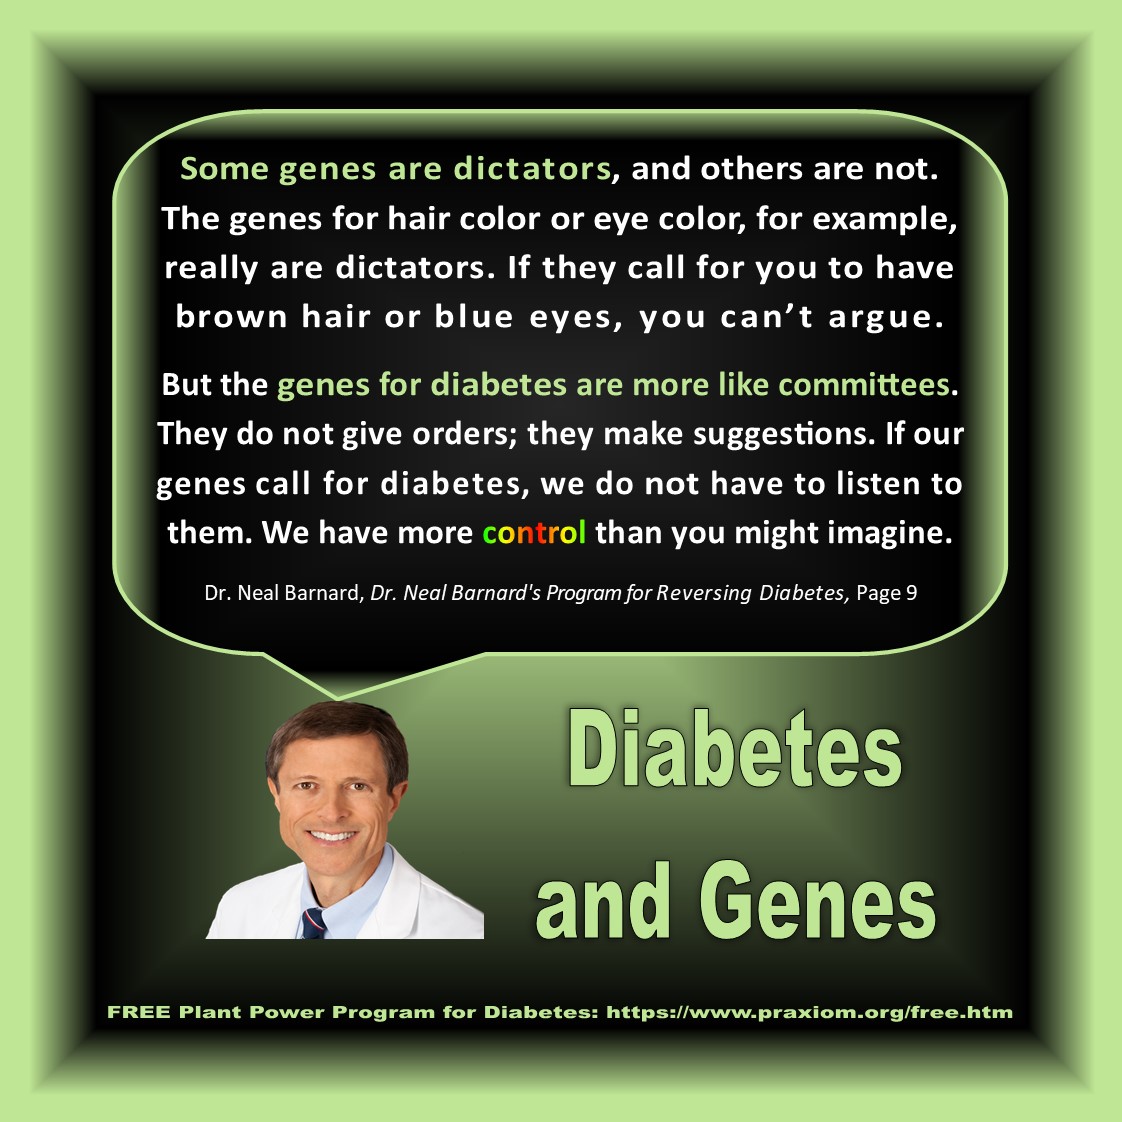 Diabetes and Genes - Dr. Neal Barnard